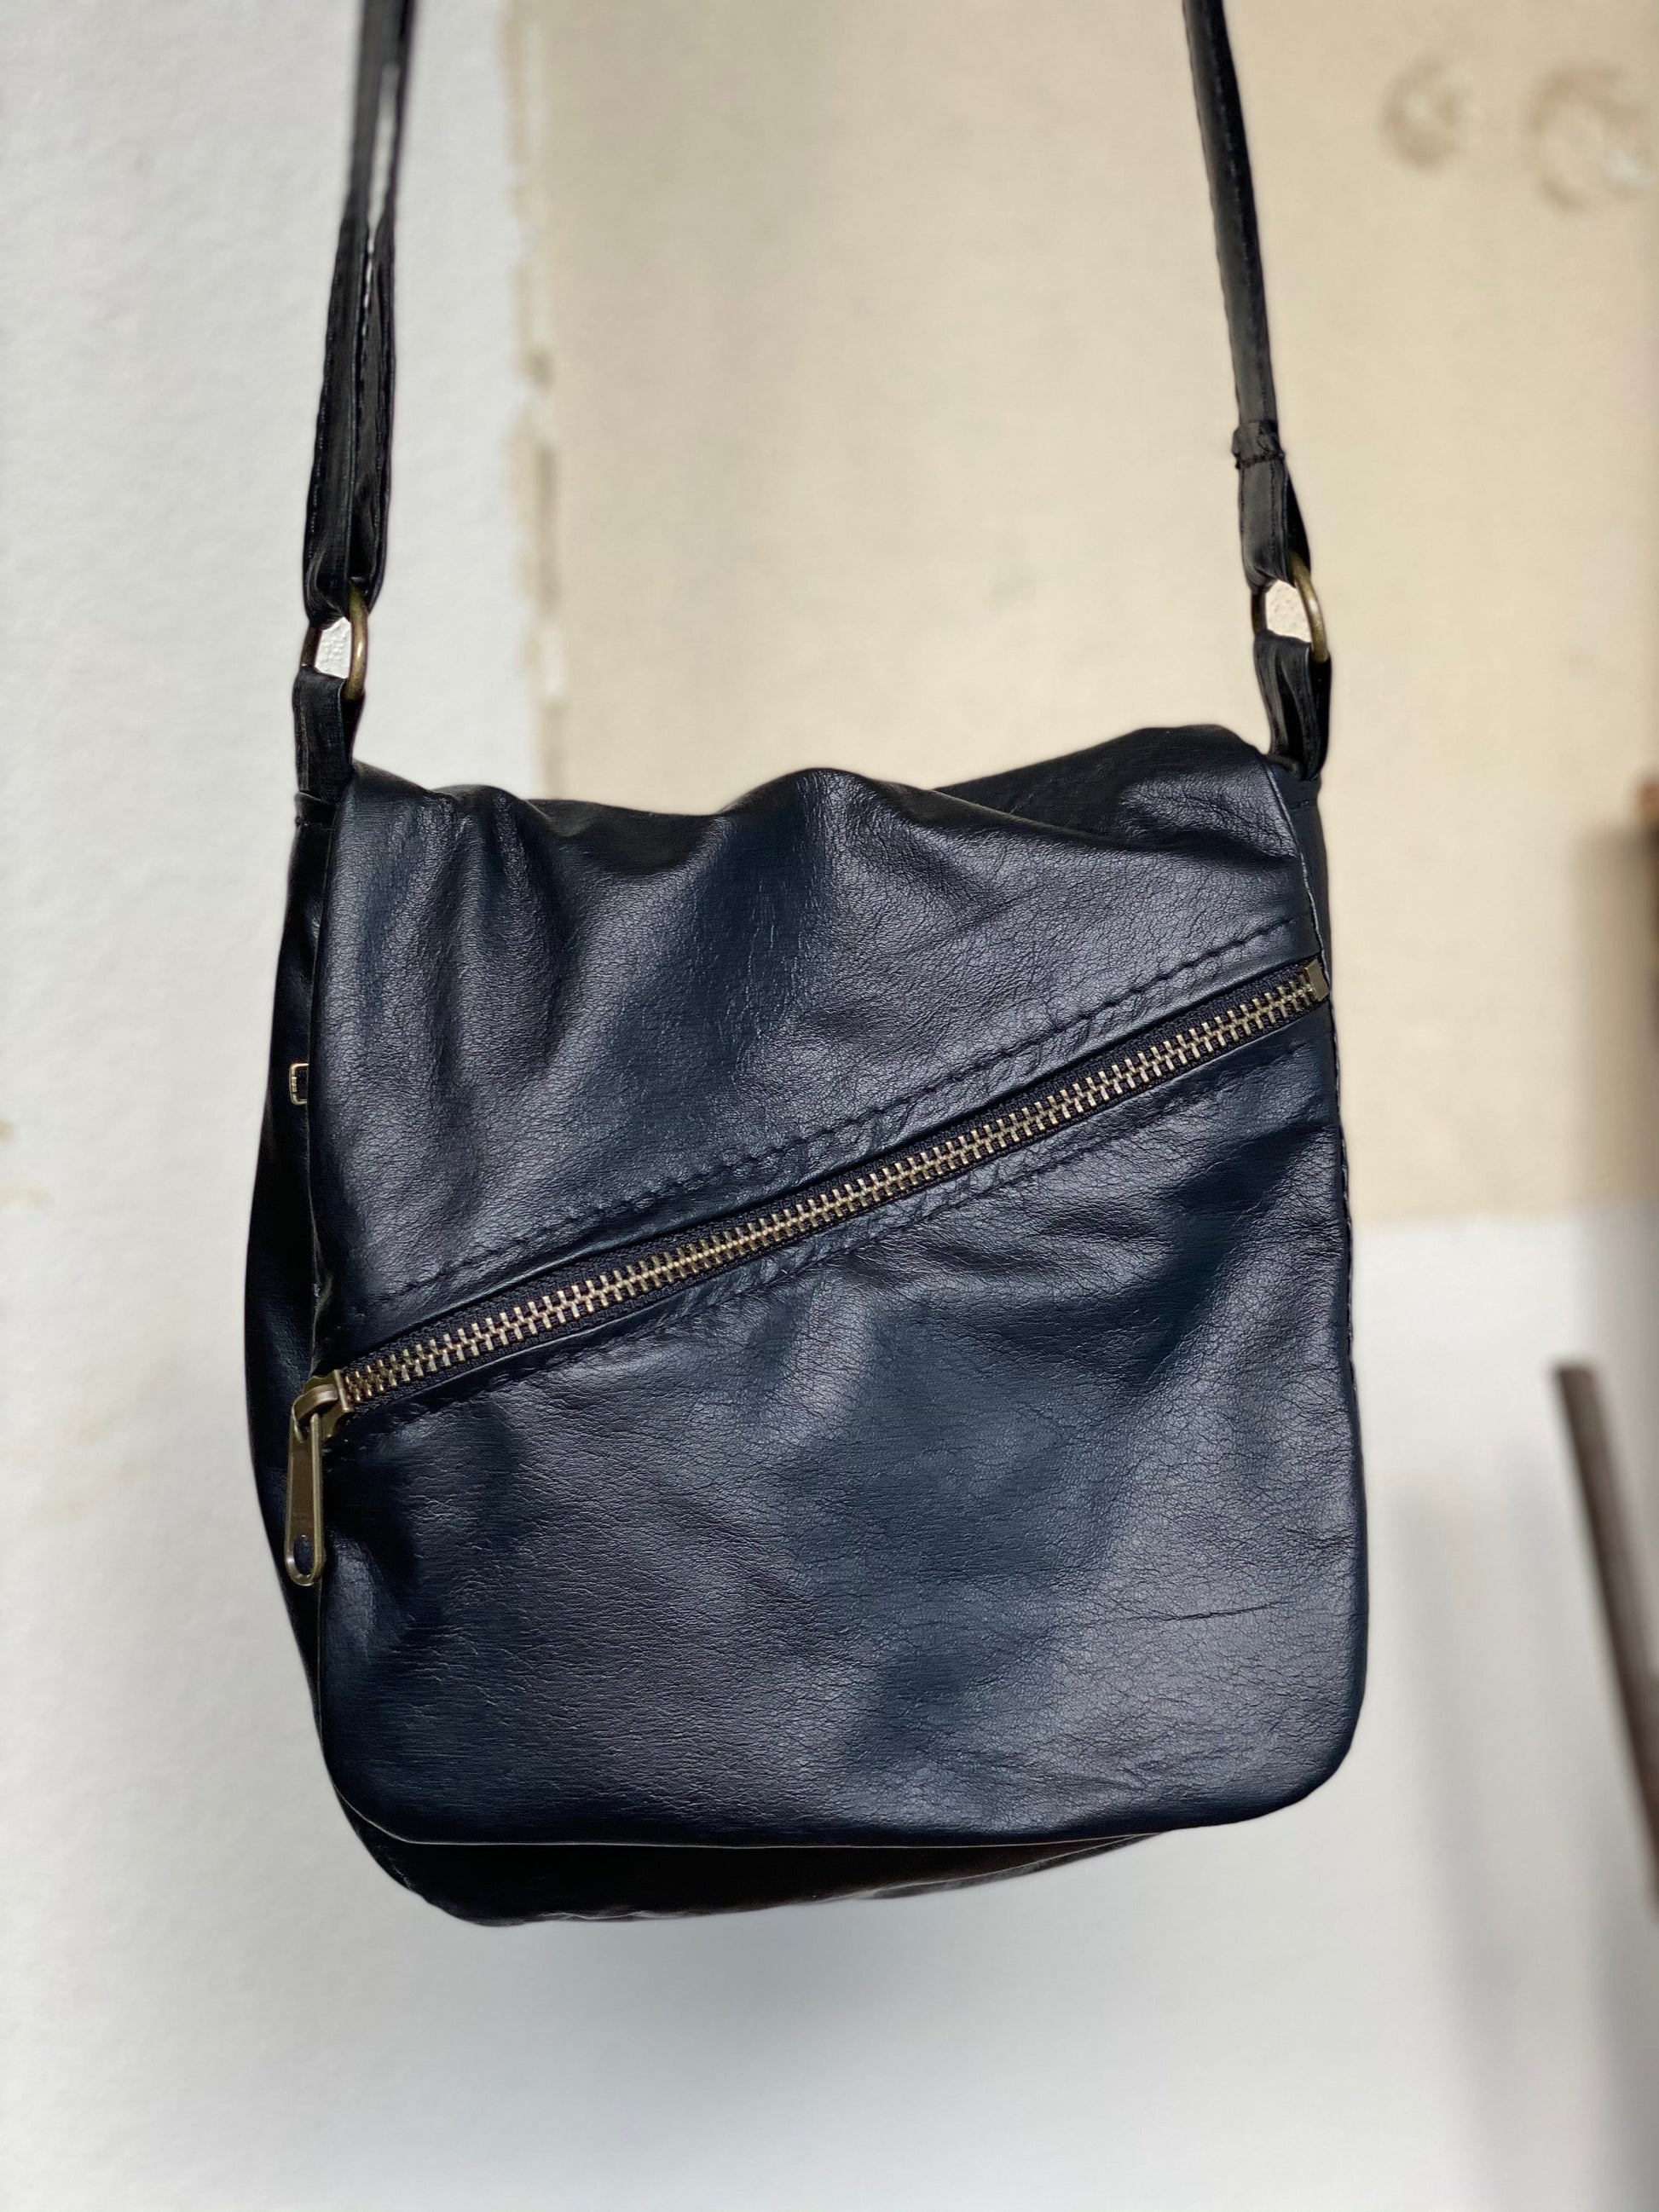 The Real McCaul Shoulder Bags Best Kangaroo (Soft) / Black Universal Satchel Bag- Extra Small Australian Made Australian Owned Leather Satchel Bag- Australian Made in Kangaroo and Cowhide Leather